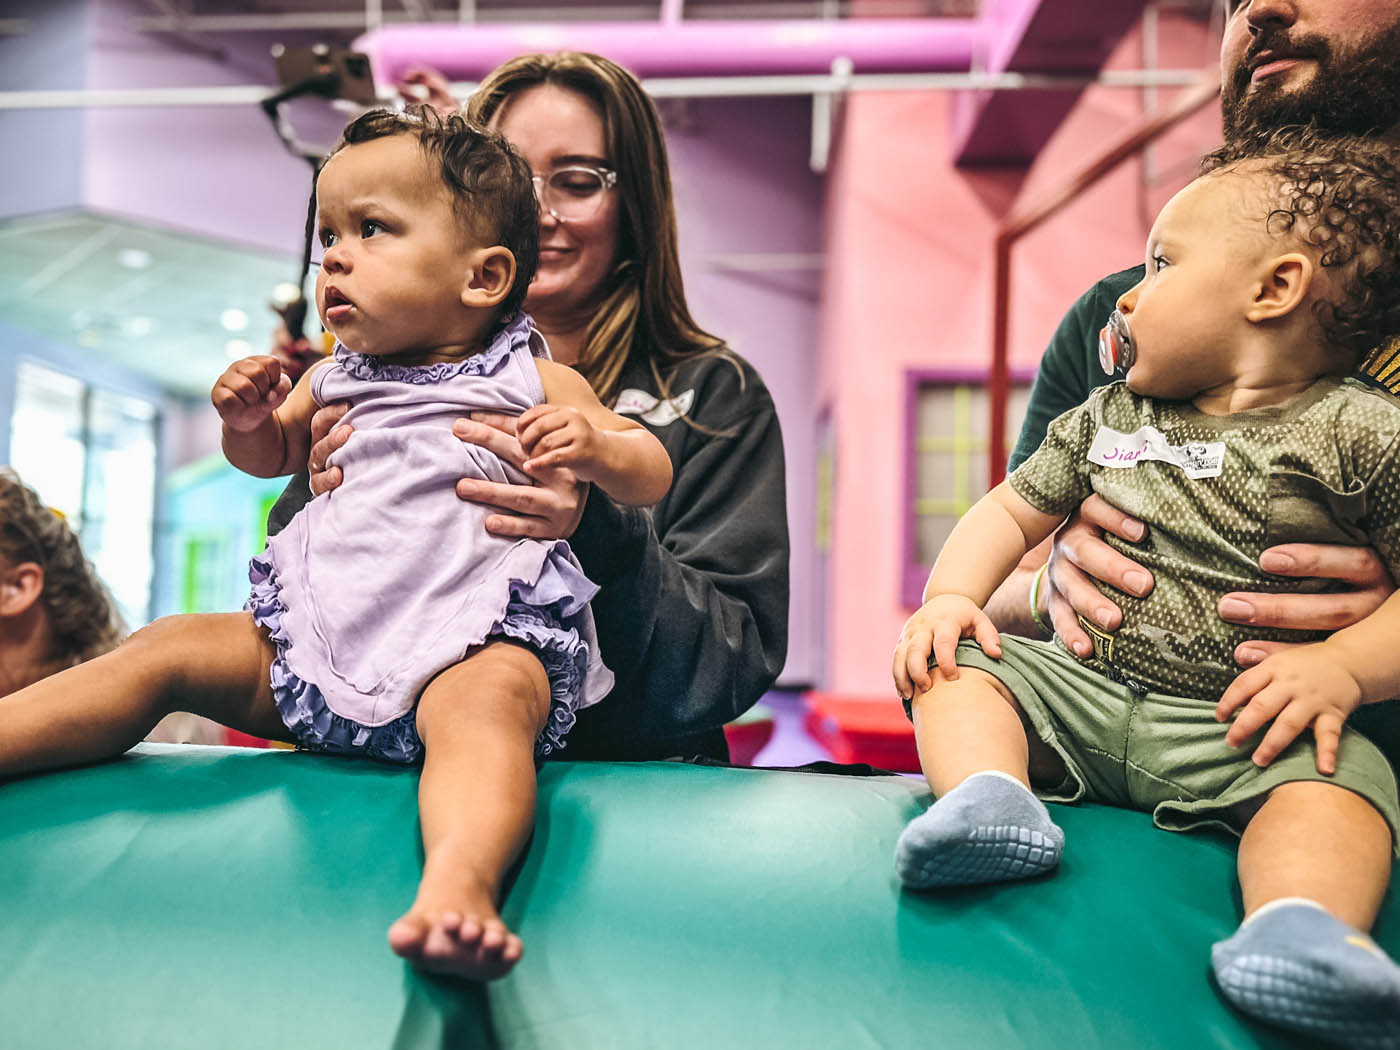 Adults with babies in Romp n' Roll's baby activities in Midlothian, VA.